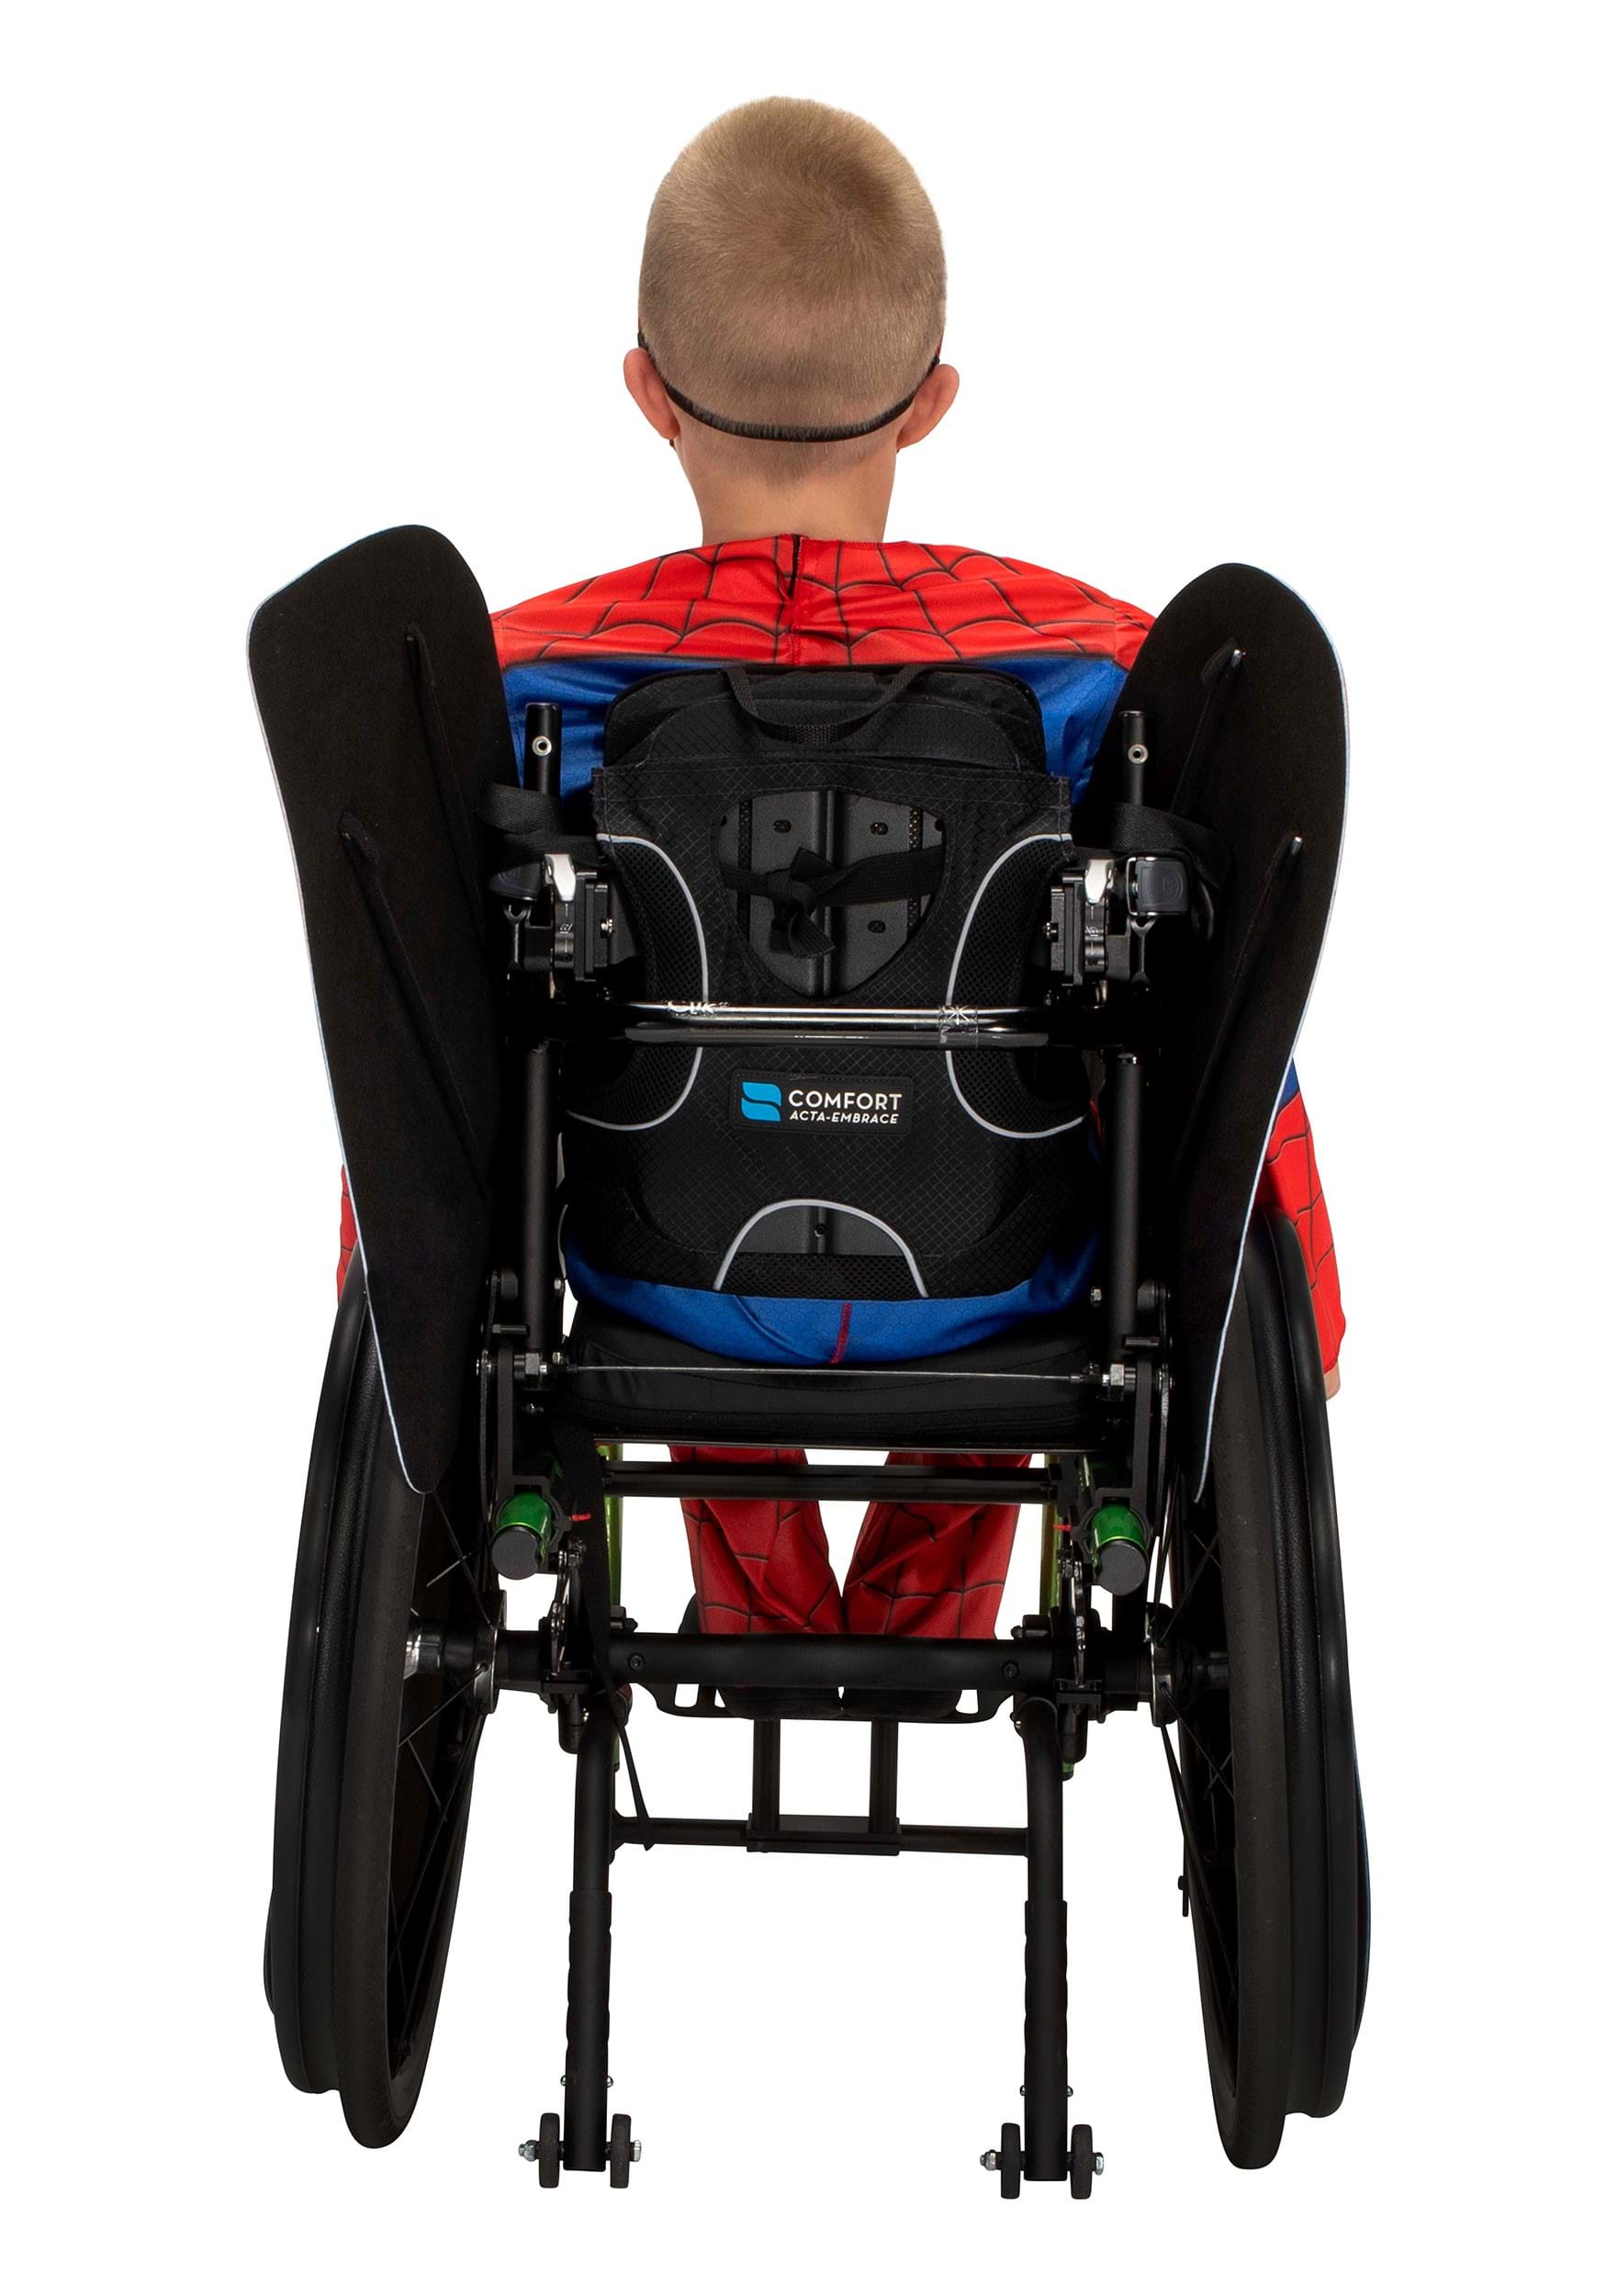 https://images.halloweencostumes.com/products/91915/2-1-283046/child-adaptive-spiderman-wheelchair-accessory-alt-1.jpg